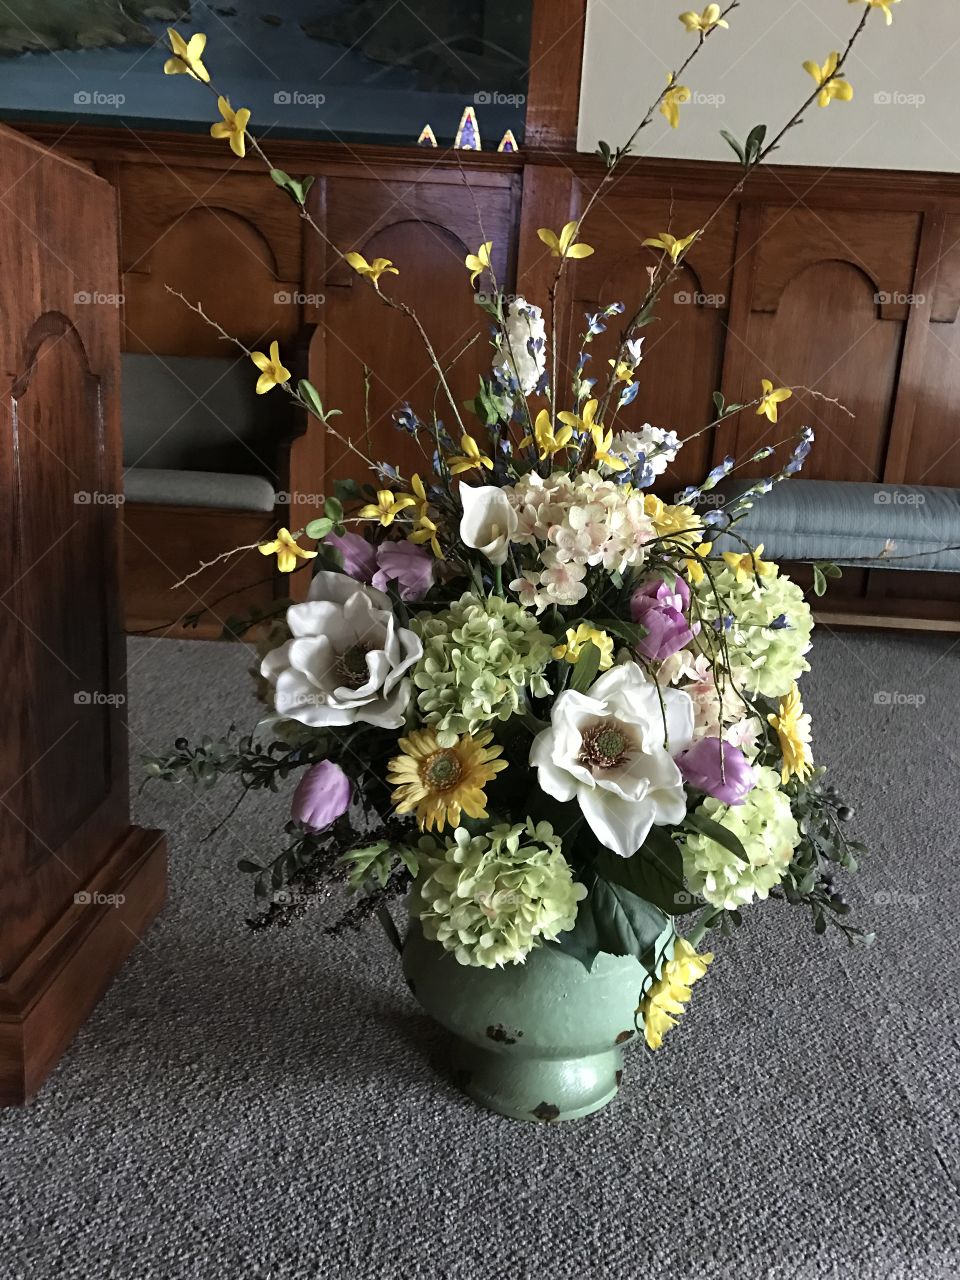 A beautiful Spring floral arrangement for a church podium.